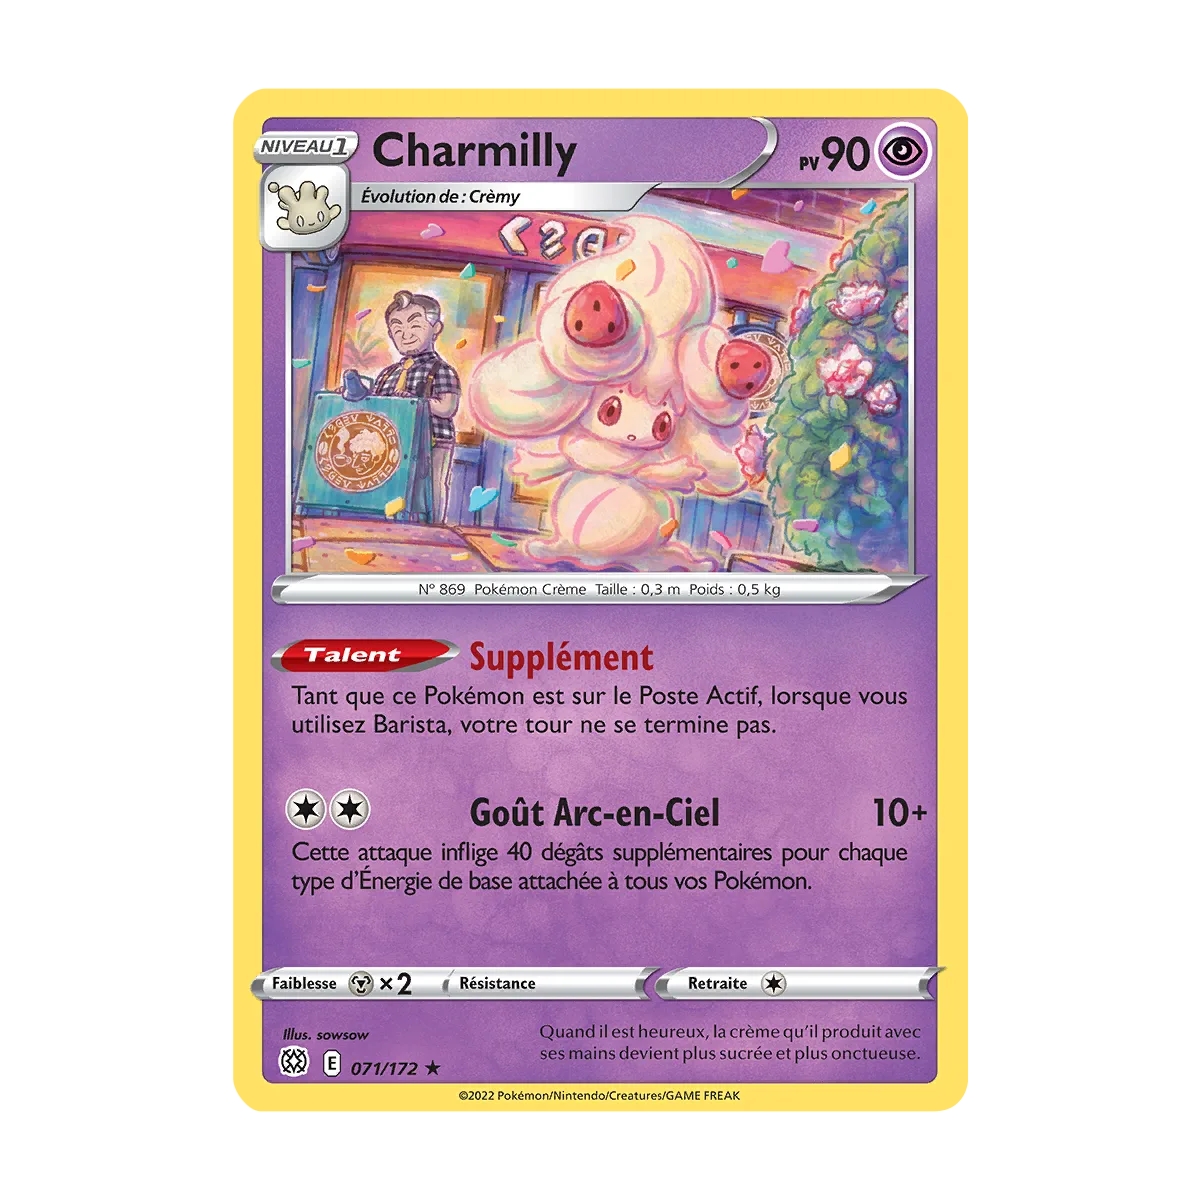 Charmilly 071/172 : Joyau Rare (Brillante) de l'extension Pokémon Stars Étincelantes